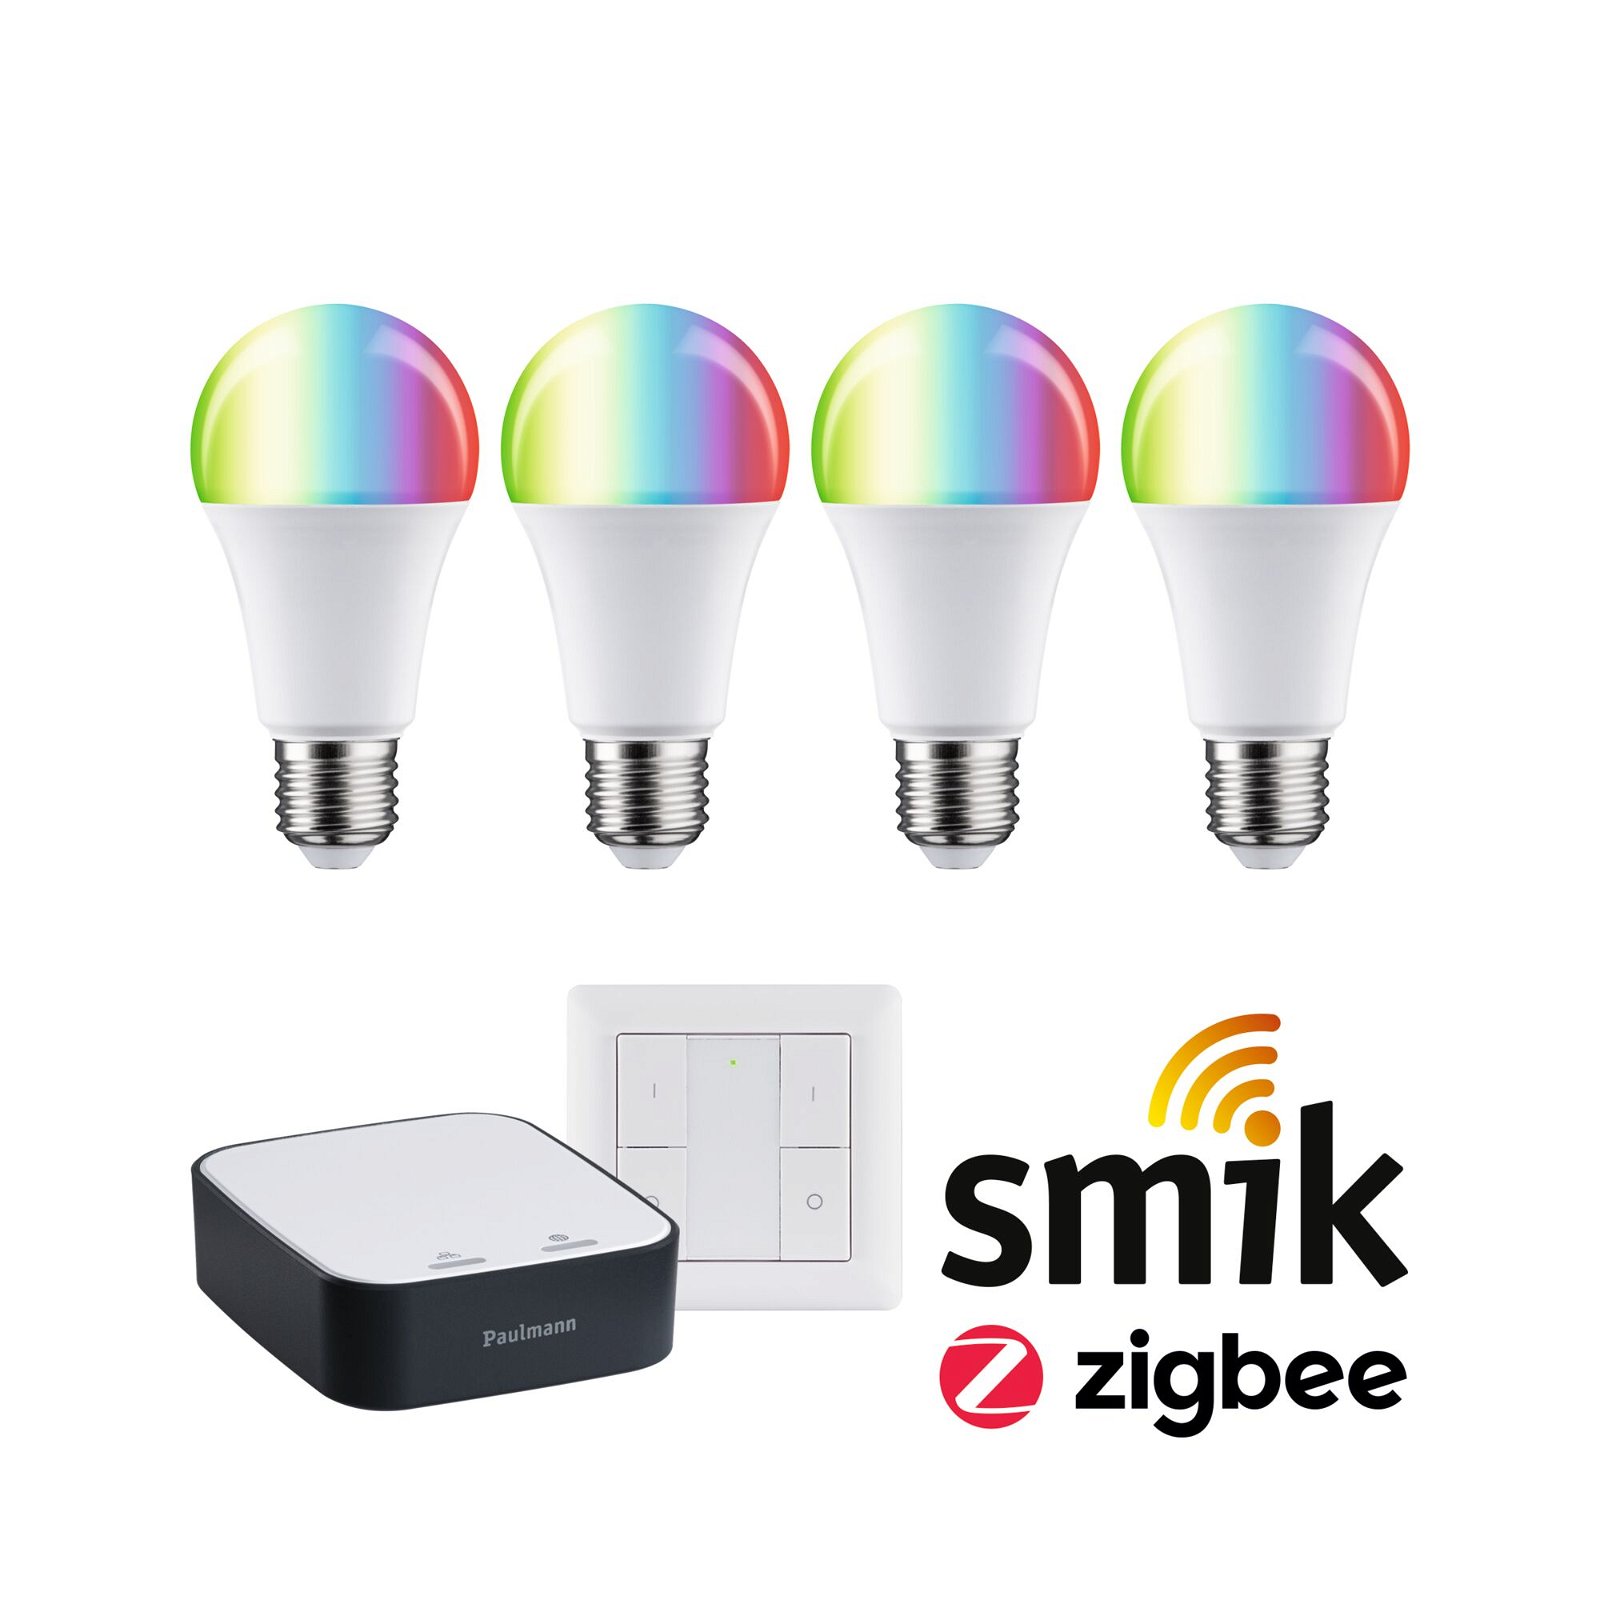 Kits de démarrage Zigbee 3.0 Ampoule LED E27 RGBW + Gateway smik + Interrupteur